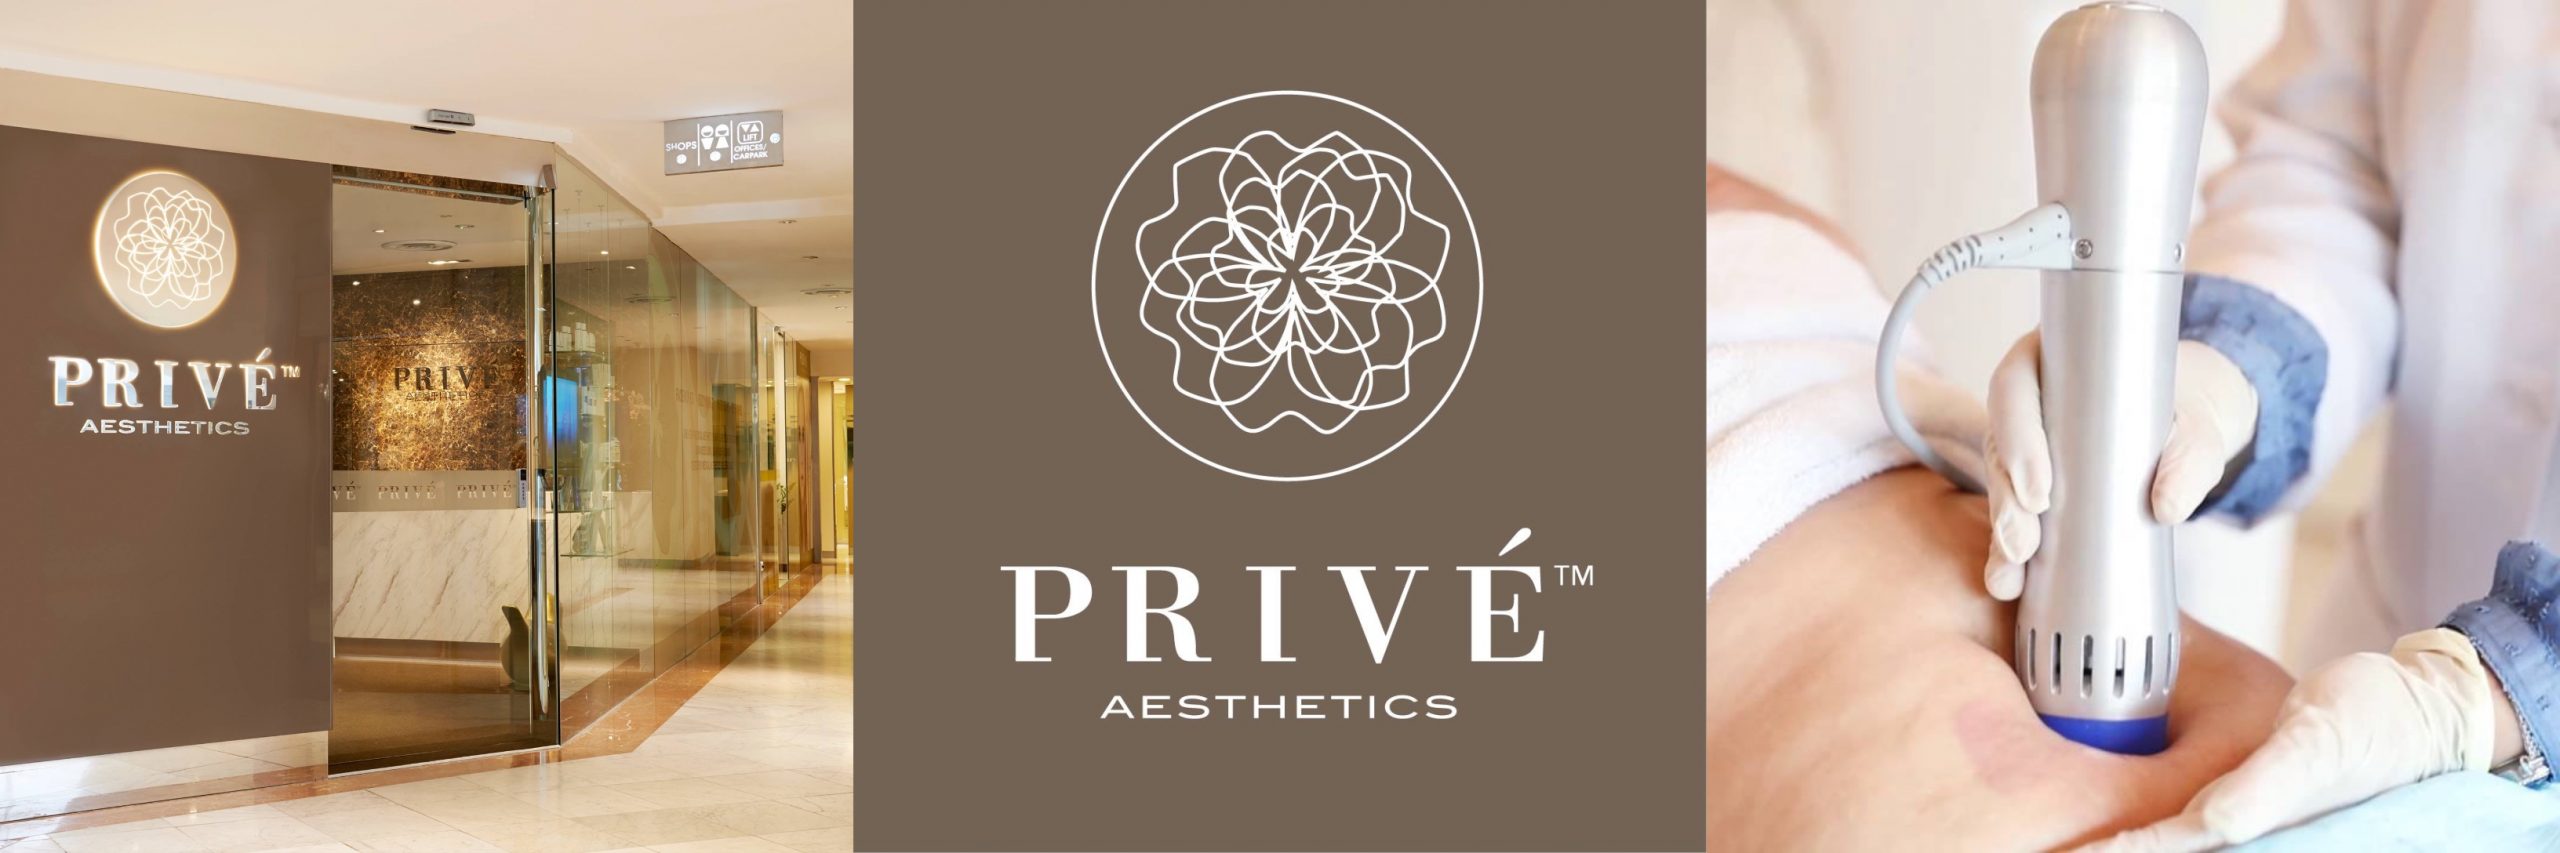 Privé Aesthetics Clinic Singapore: Reviewed!